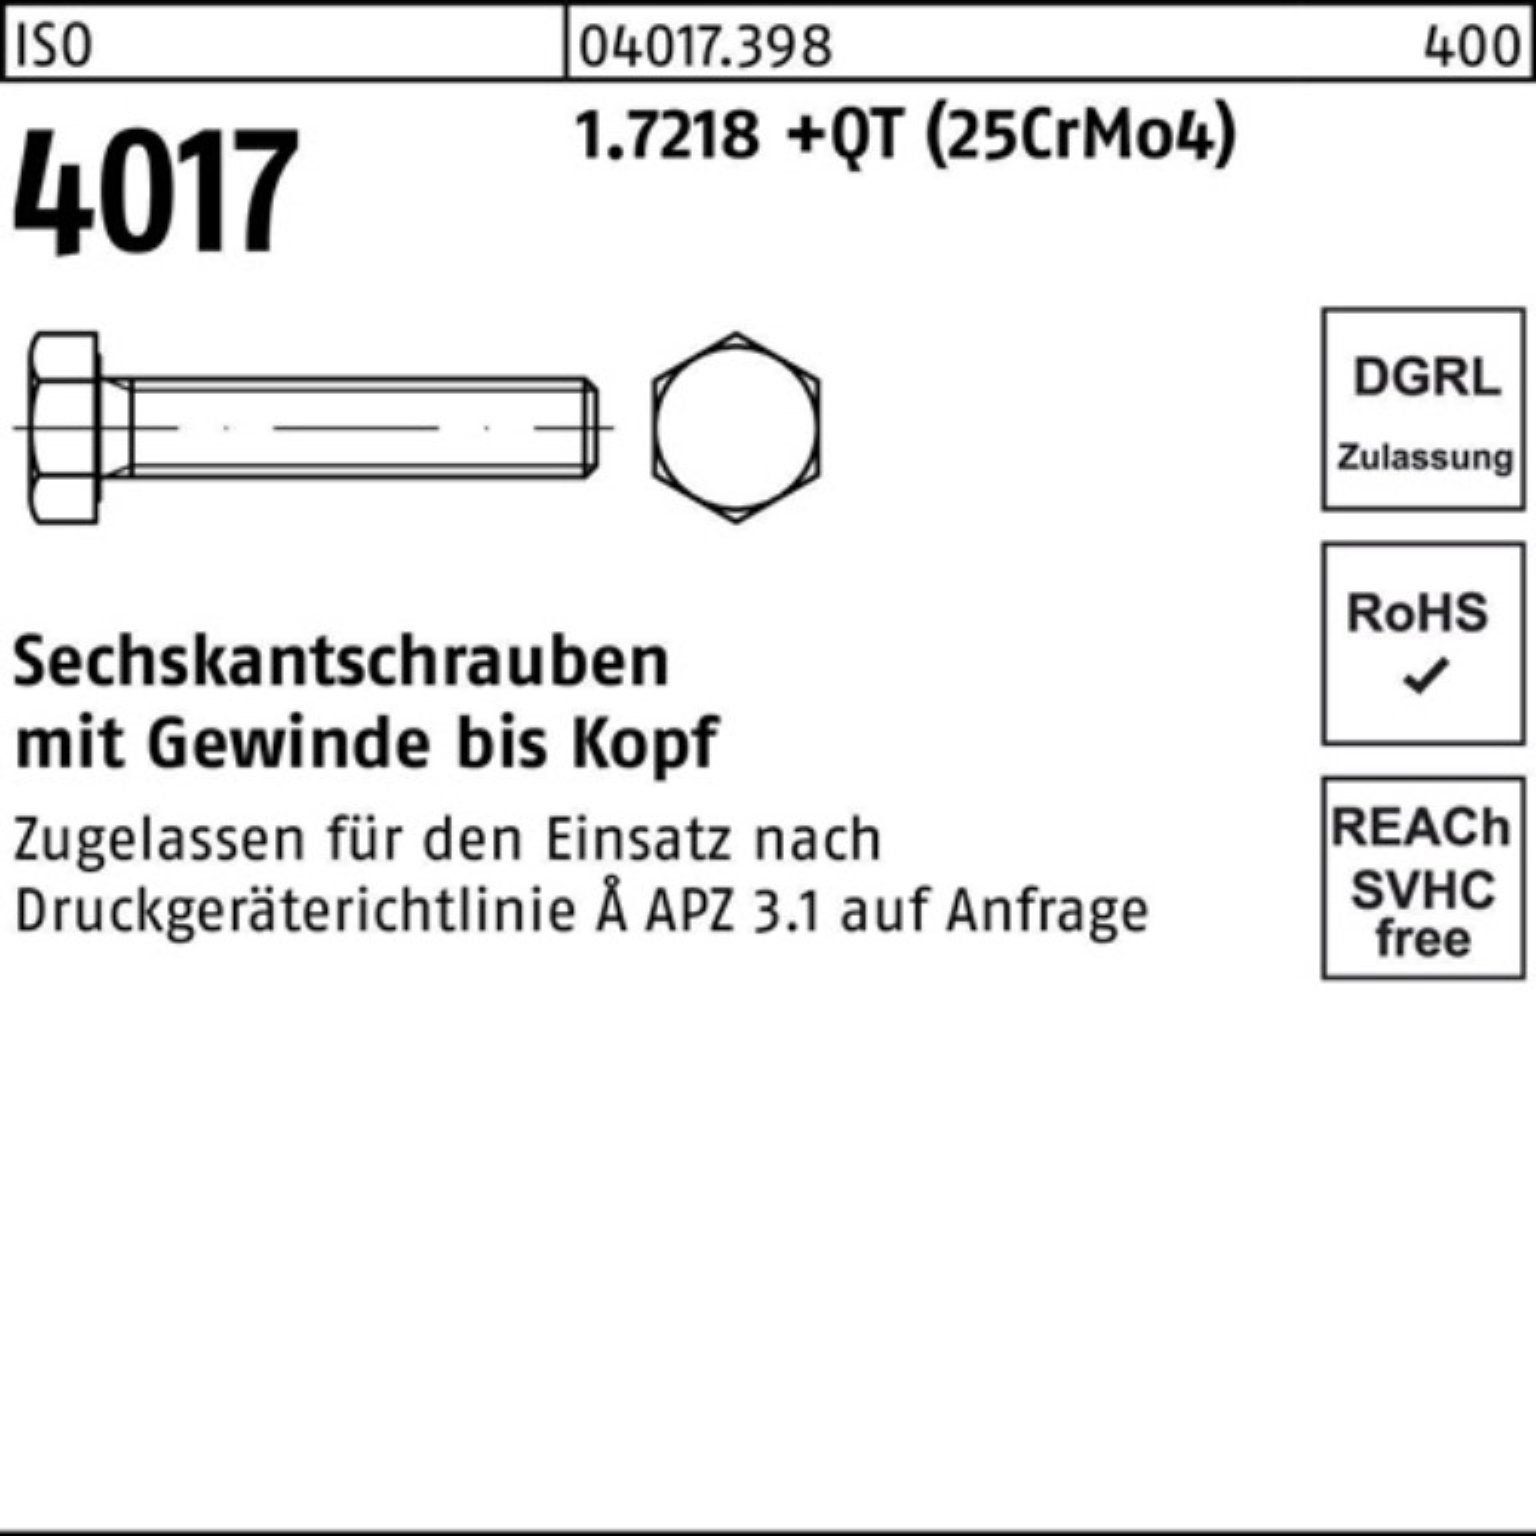 60 VG Sechskantschraube Sechskantschraube Bufab +QT M27x ISO (25CrMo4) 4017 1.7218 Pack 100er